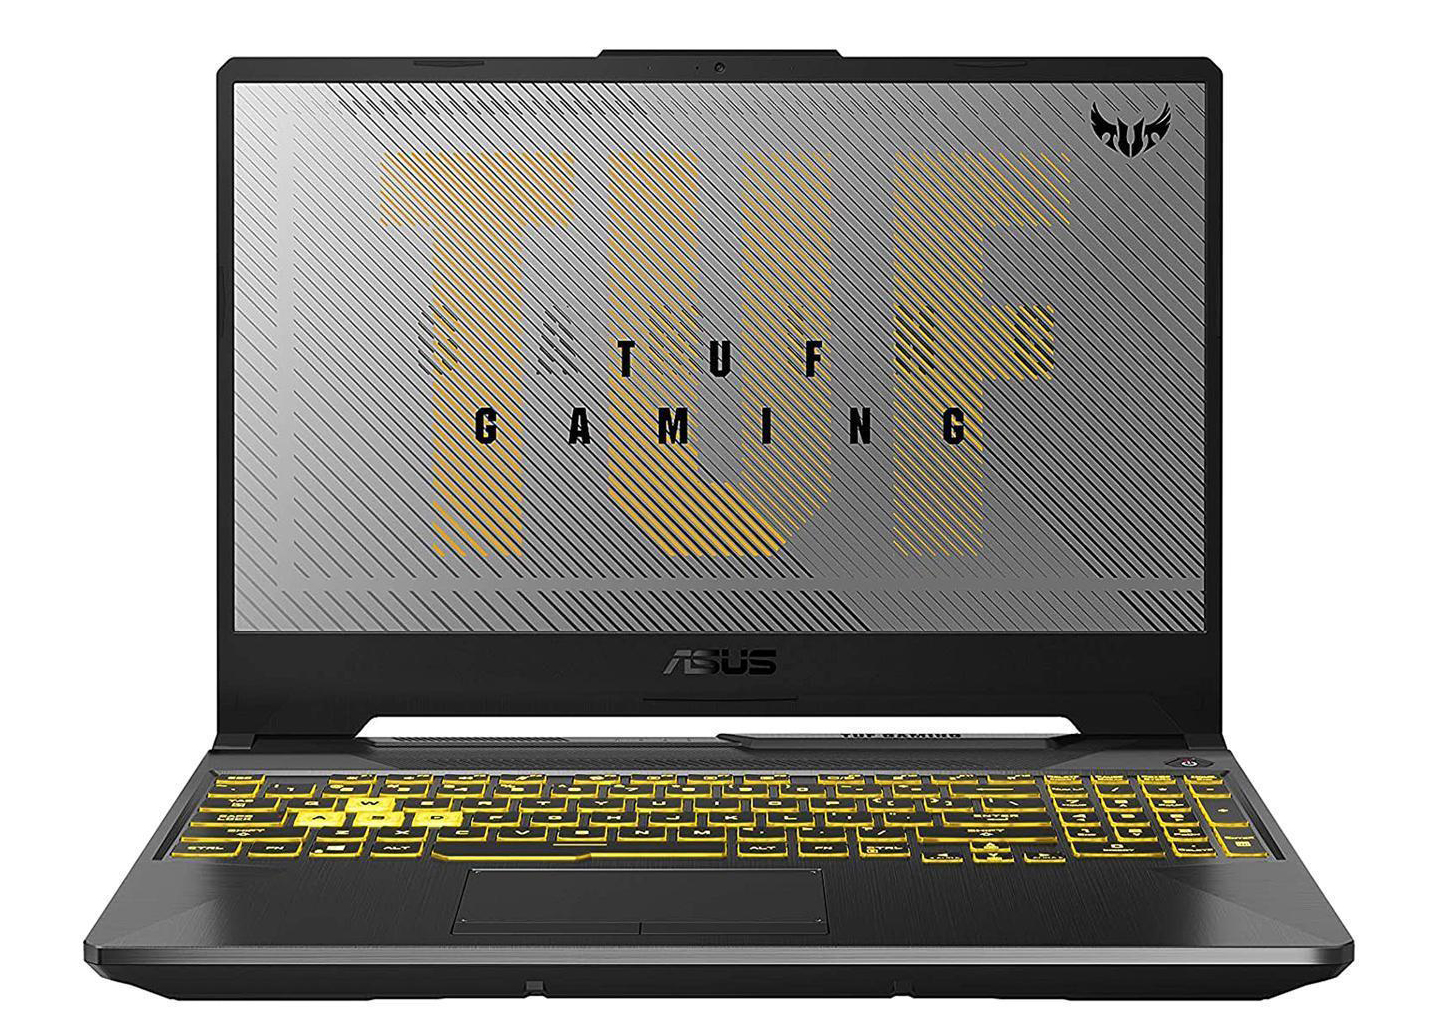 ASUS TUF Gaming 15.6 Inch Intel Core i5 10th Gen 16GB RAM 512GB